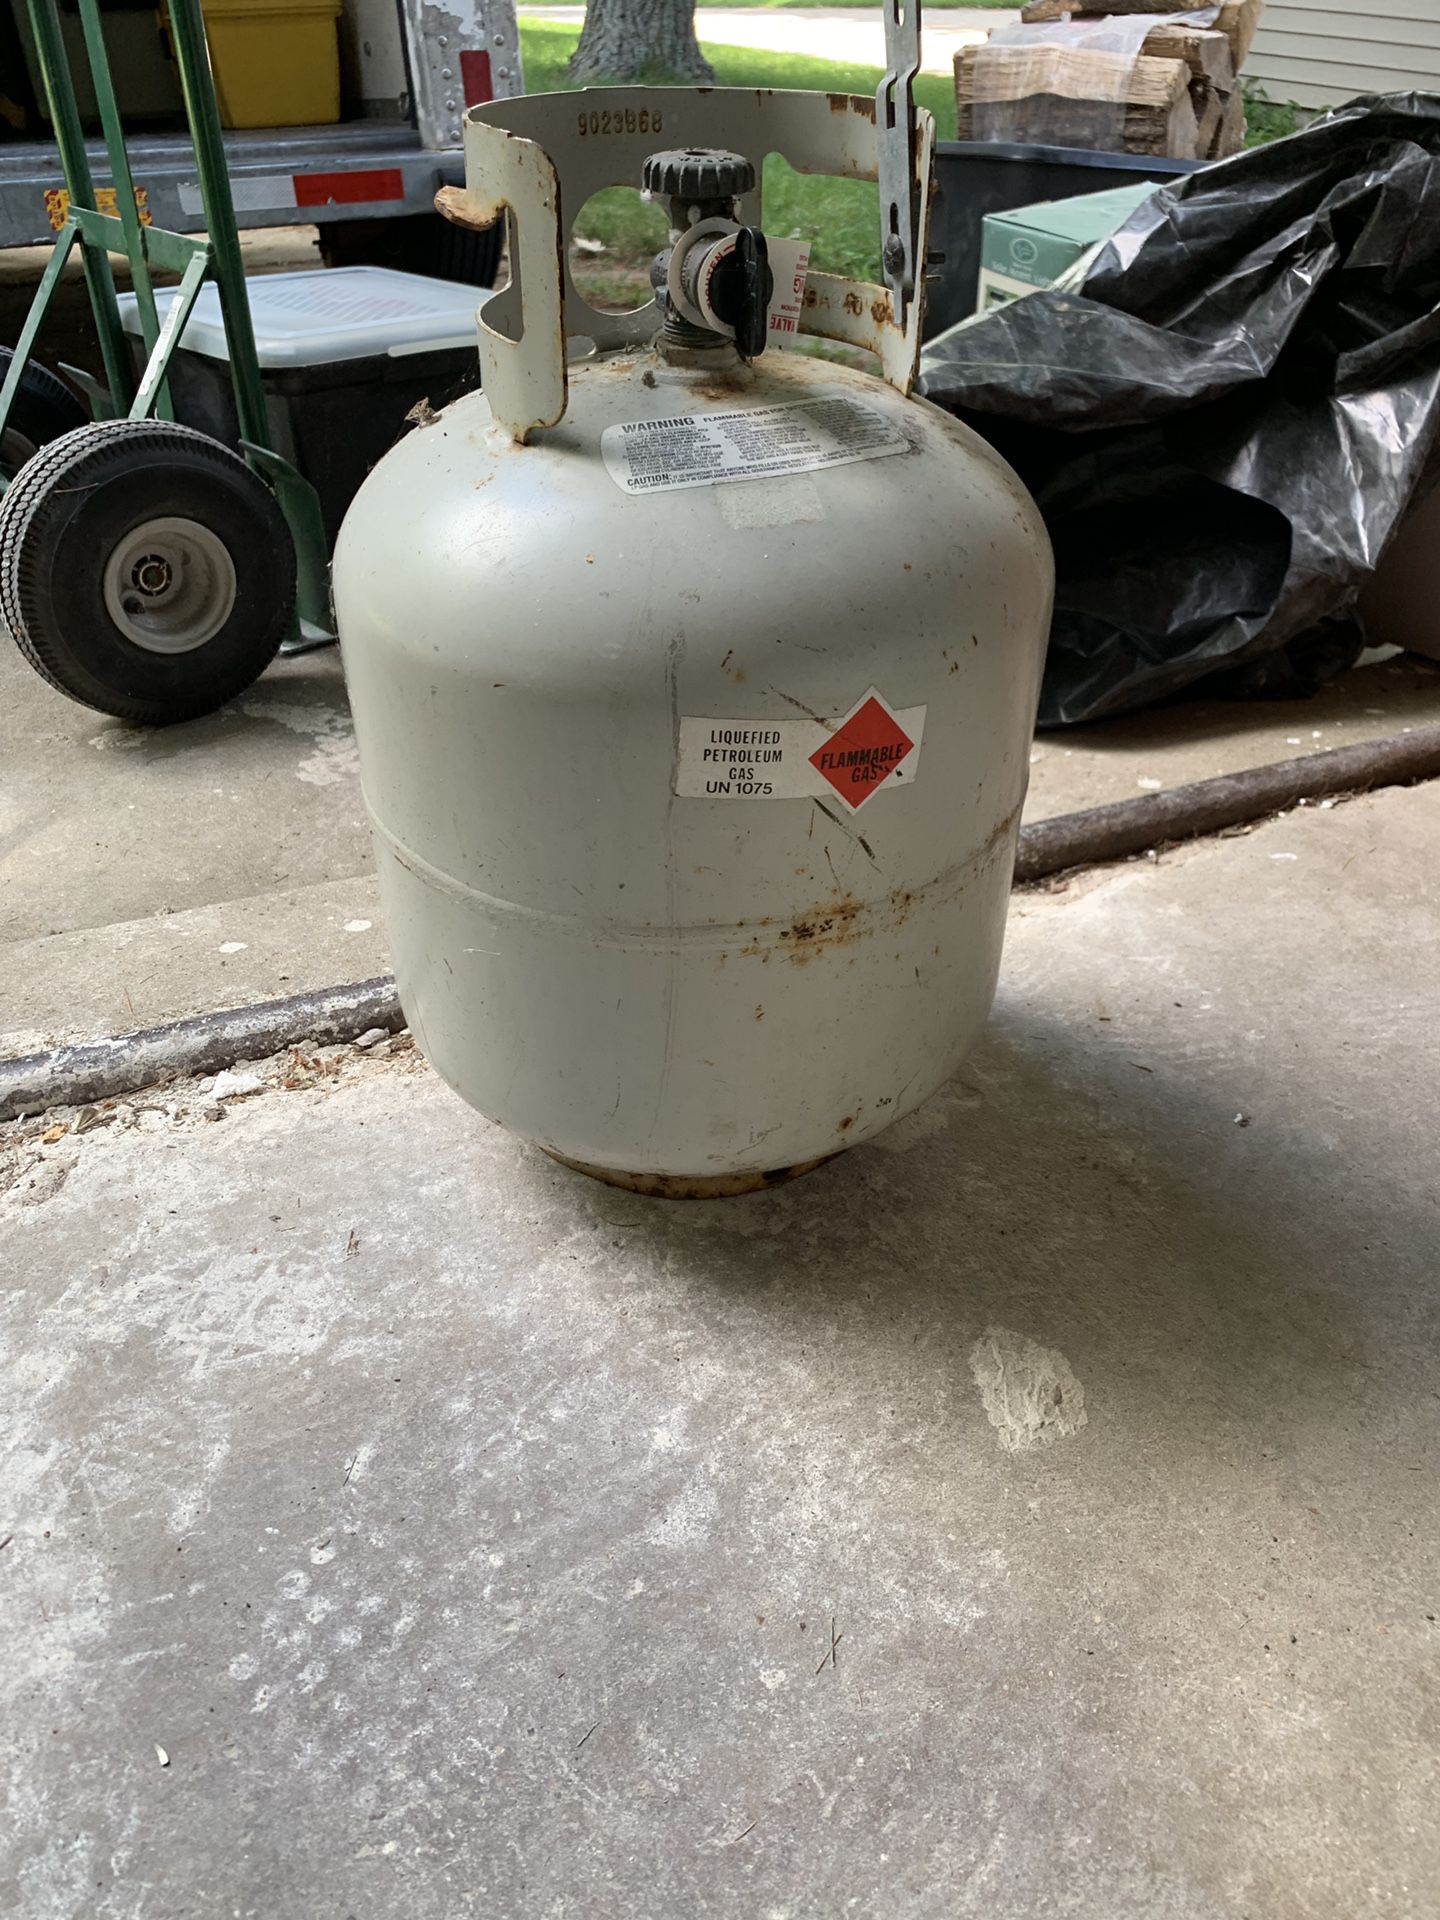 Propane tank full of Propane gas